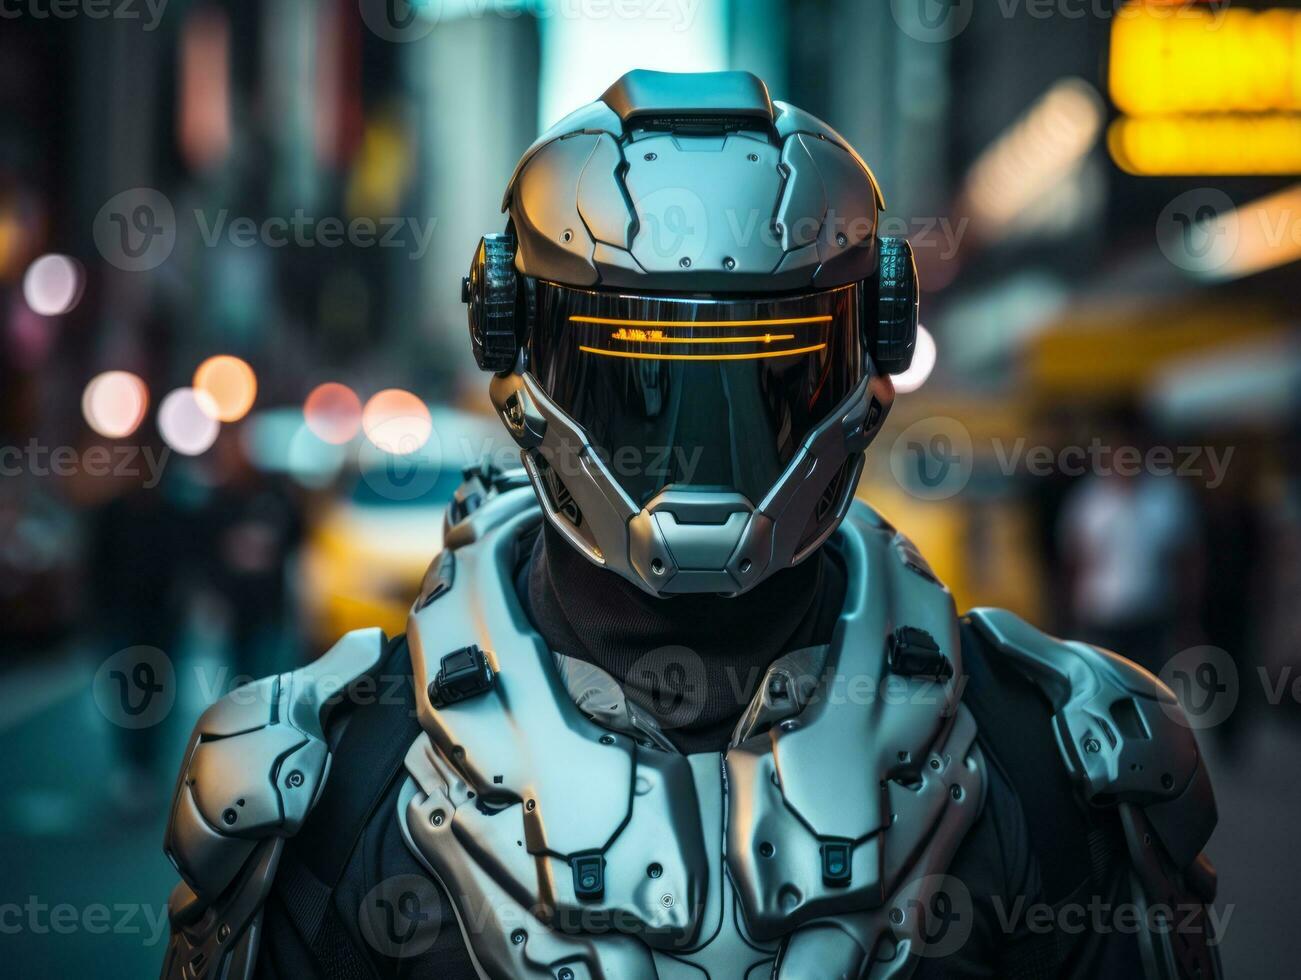 man in futuristic clothes enjoys a leisurely stroll through a city streets AI Generative photo